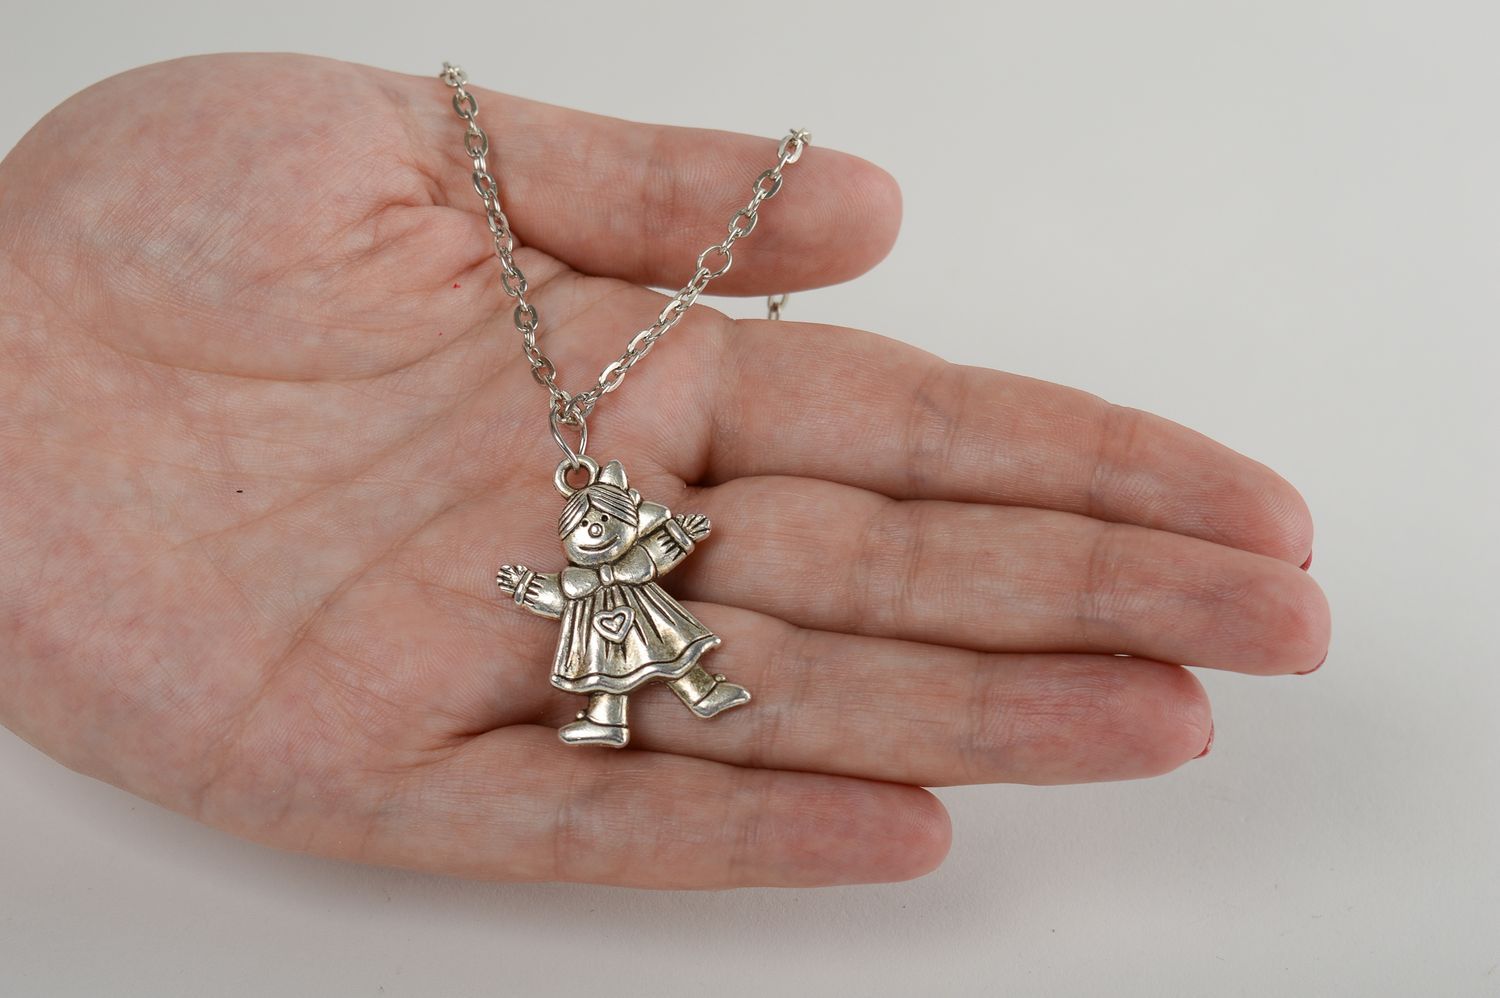 Handmade pendant fashion jewelry metal girl pendant beautiful pendant women gift photo 5